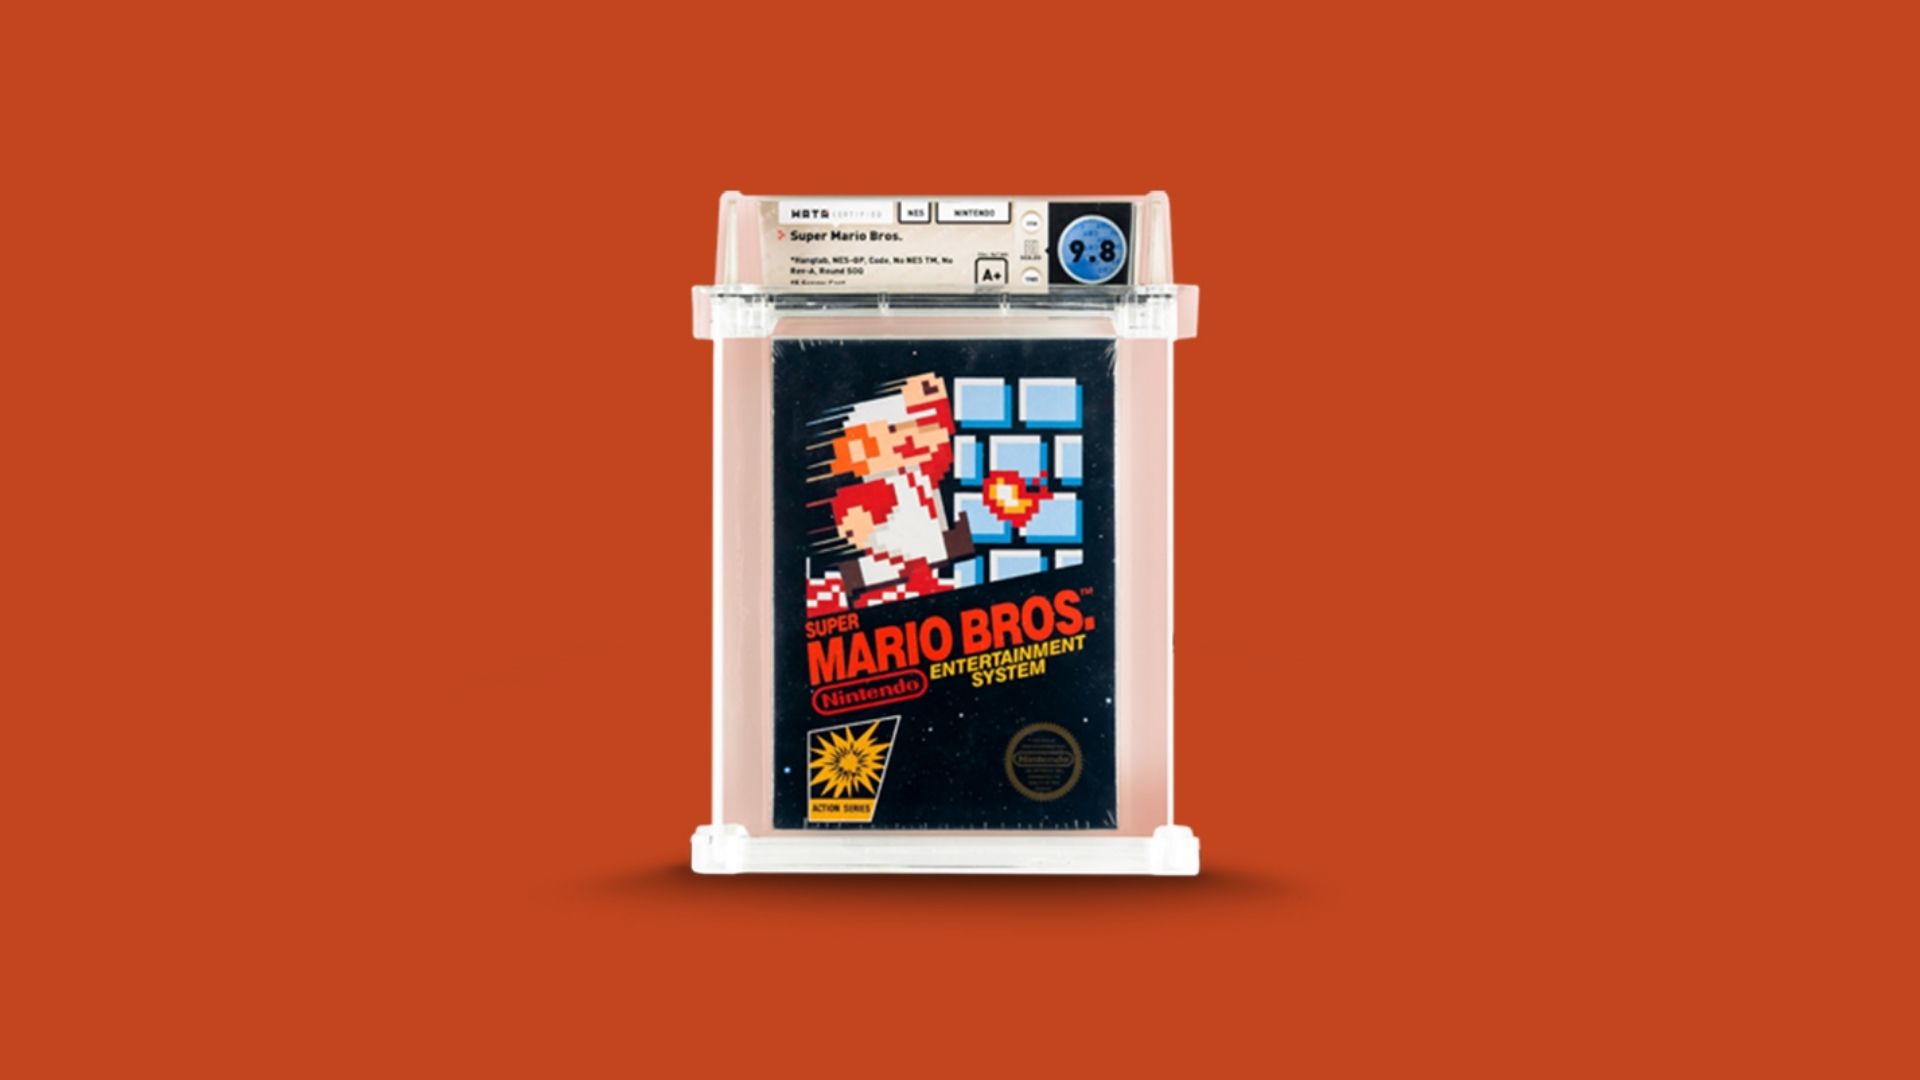 Originální kopie hry Super Mario Bros. se prodala za sto tisíc dolarů –  Doupě.cz